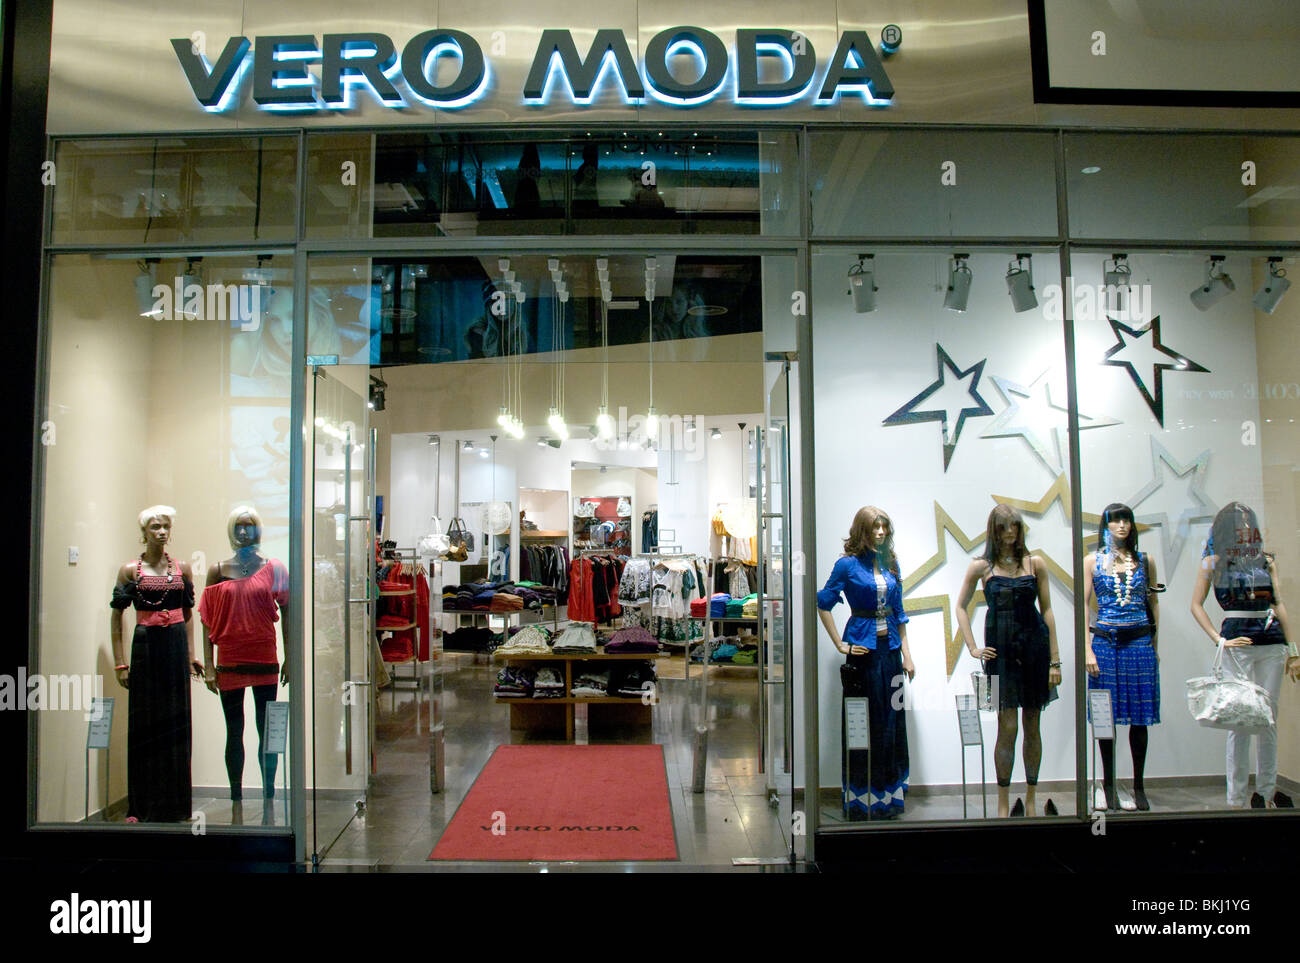 Vero Moda Resolution Stock Photography and -